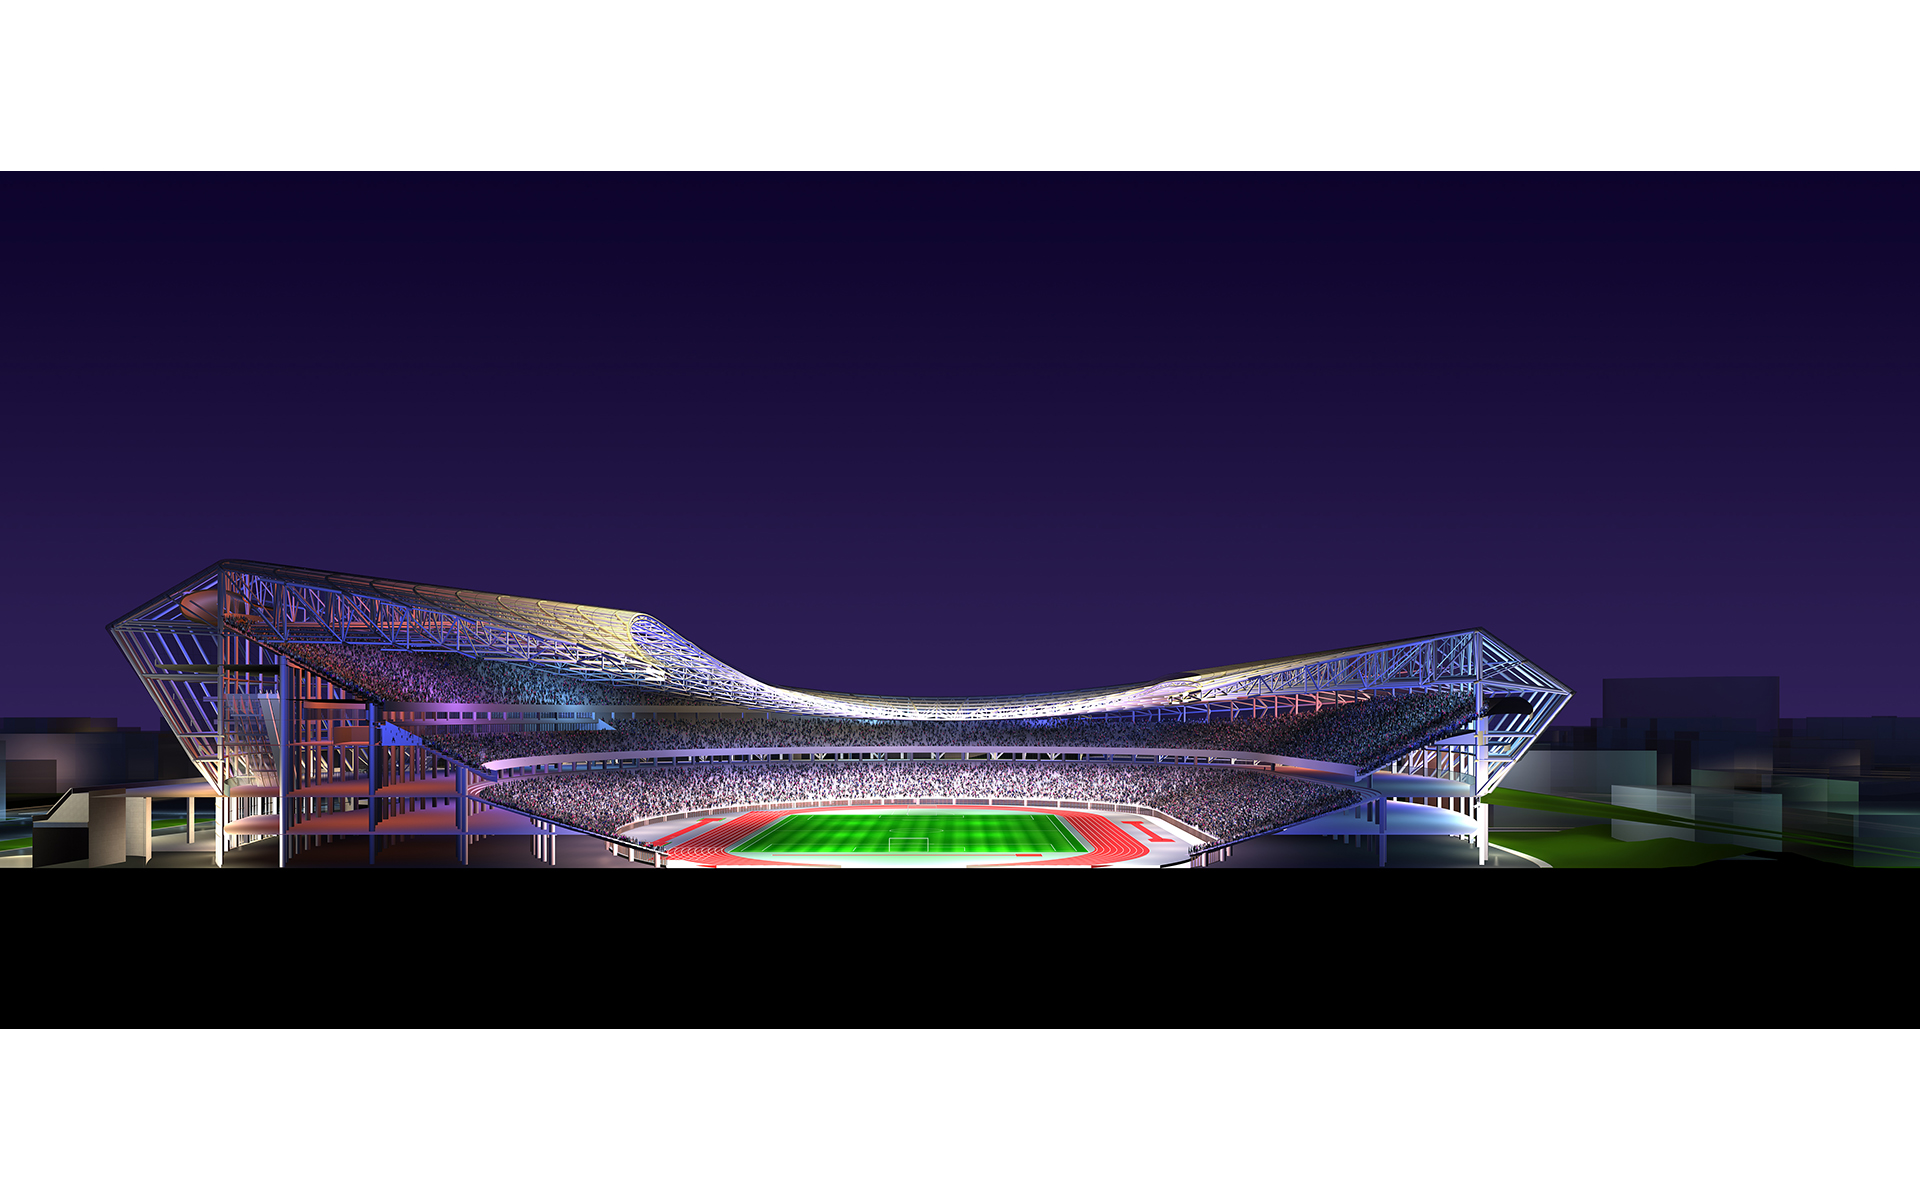 Olimpiyskiy National Sports Complex